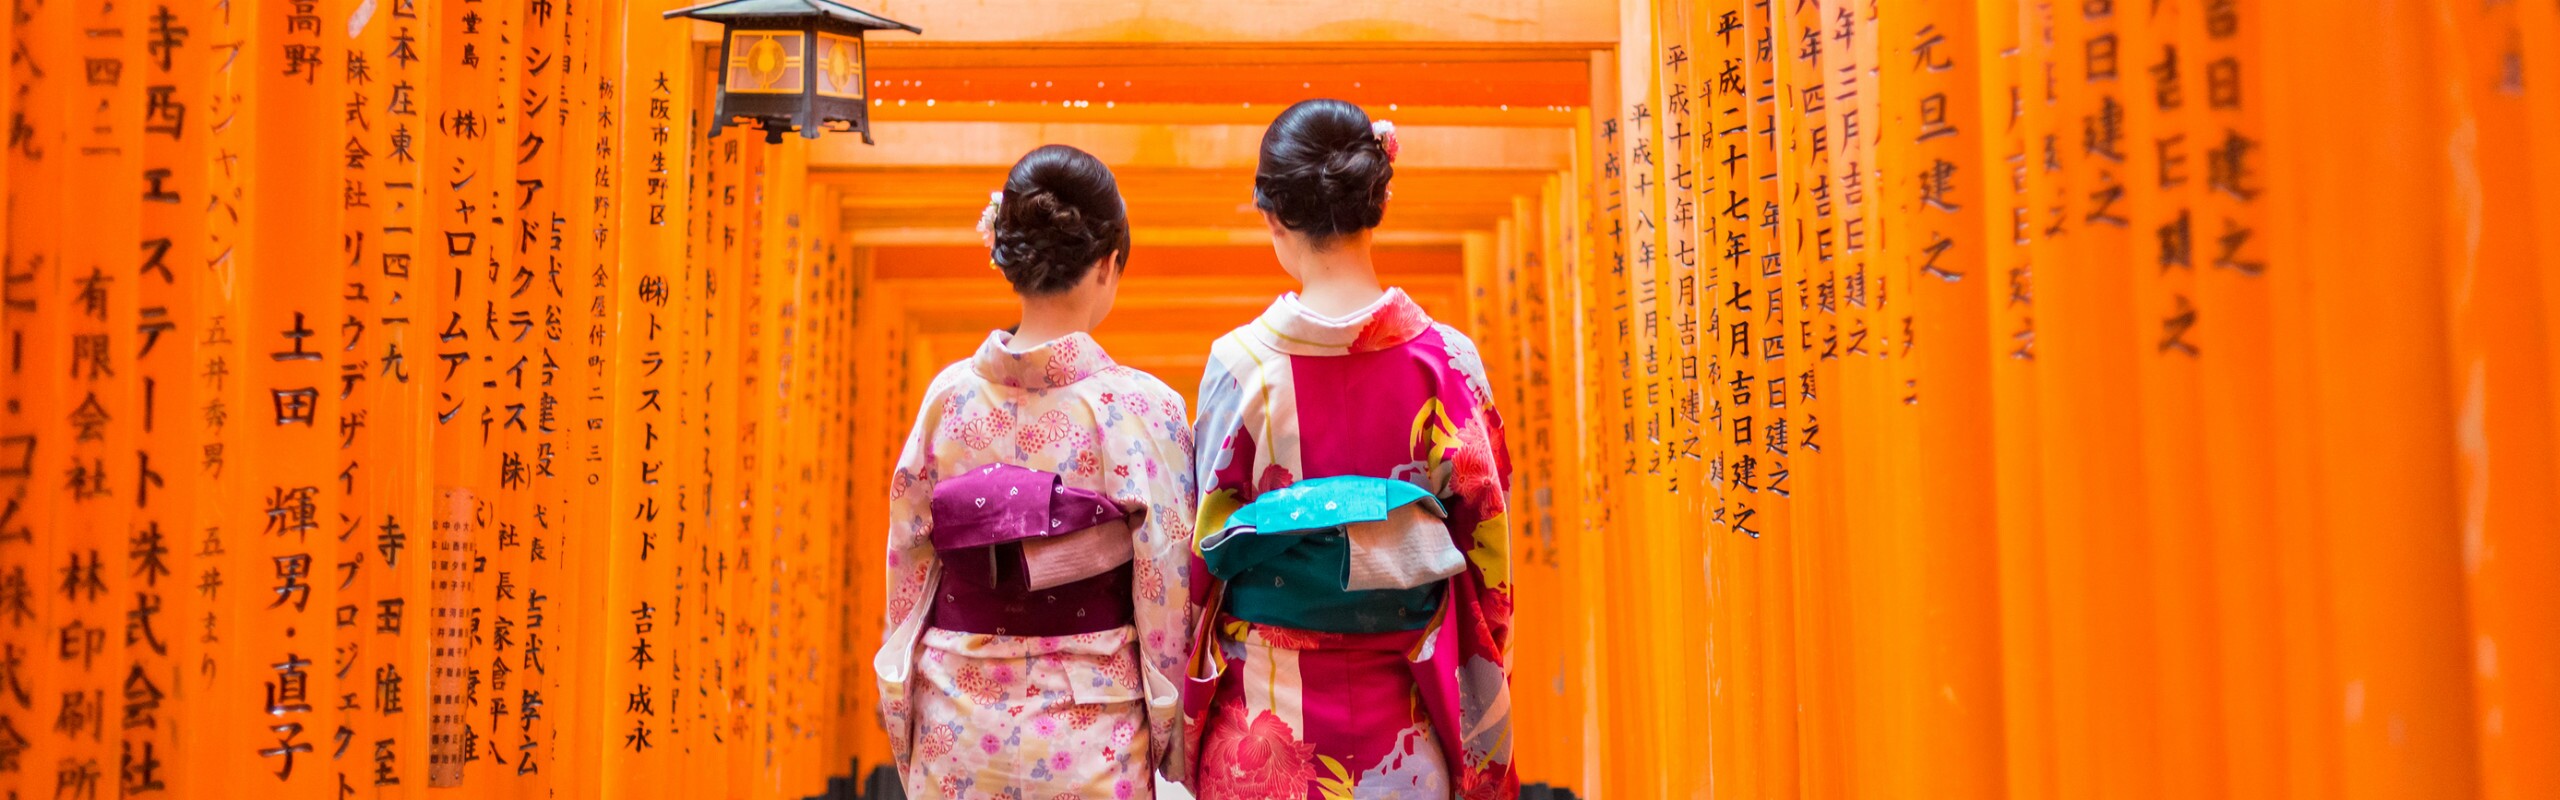 Fushimi Inari Guide 